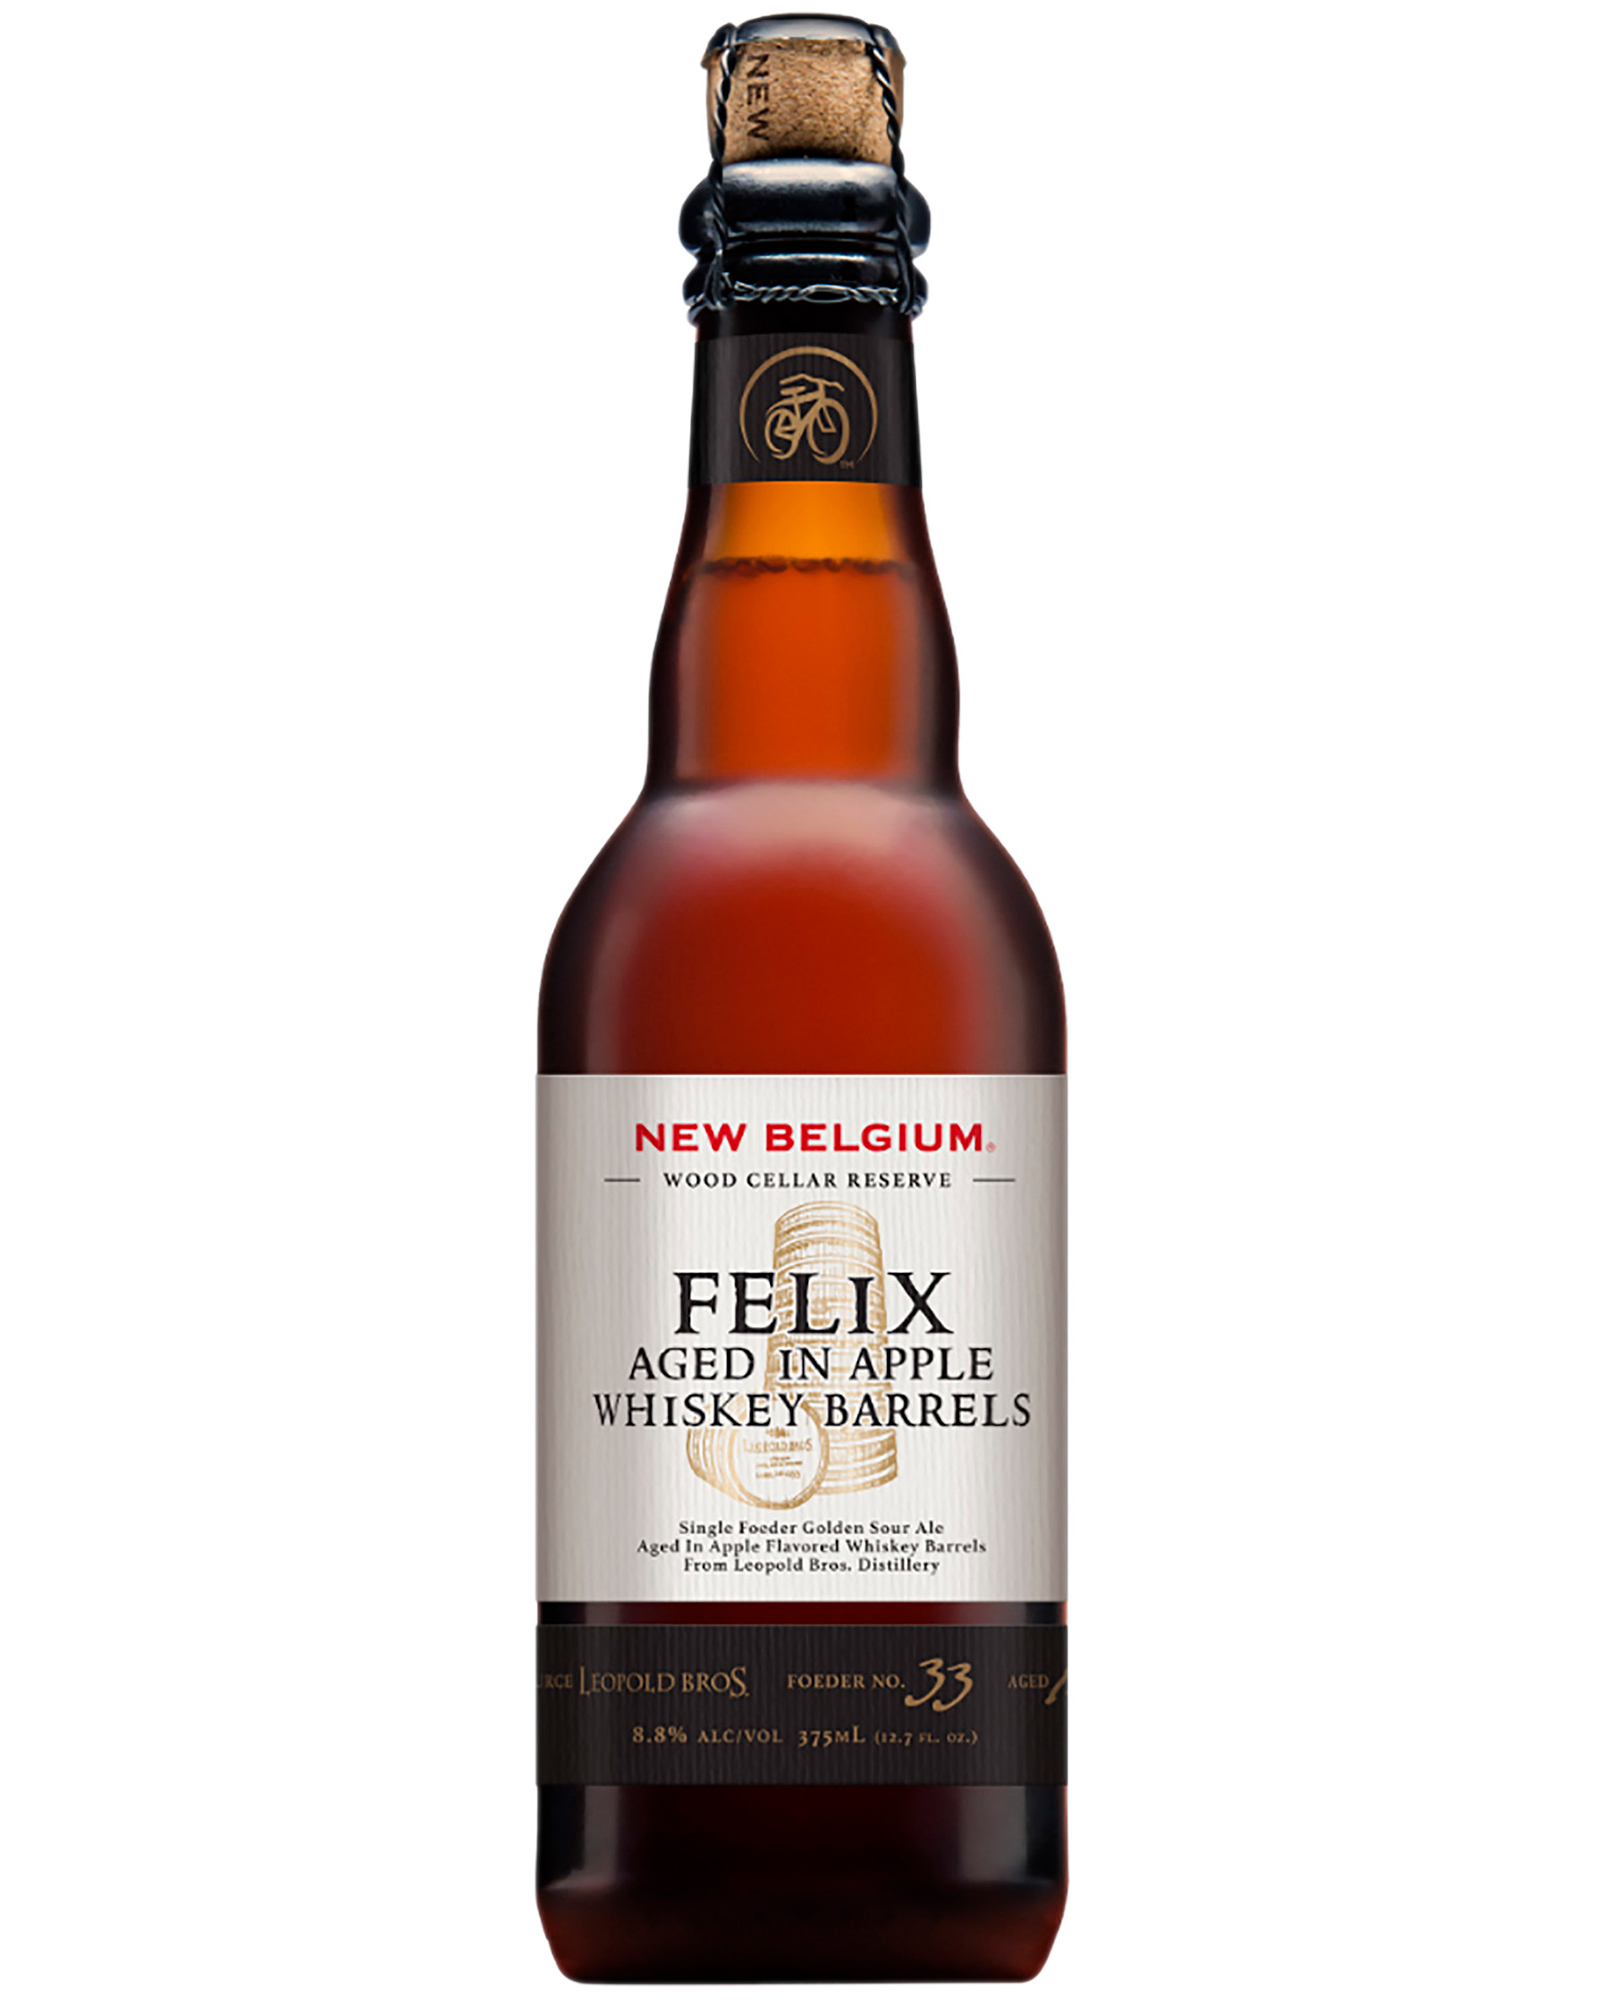 New Belgium Felix Aged in Apple Whiskey Barrels